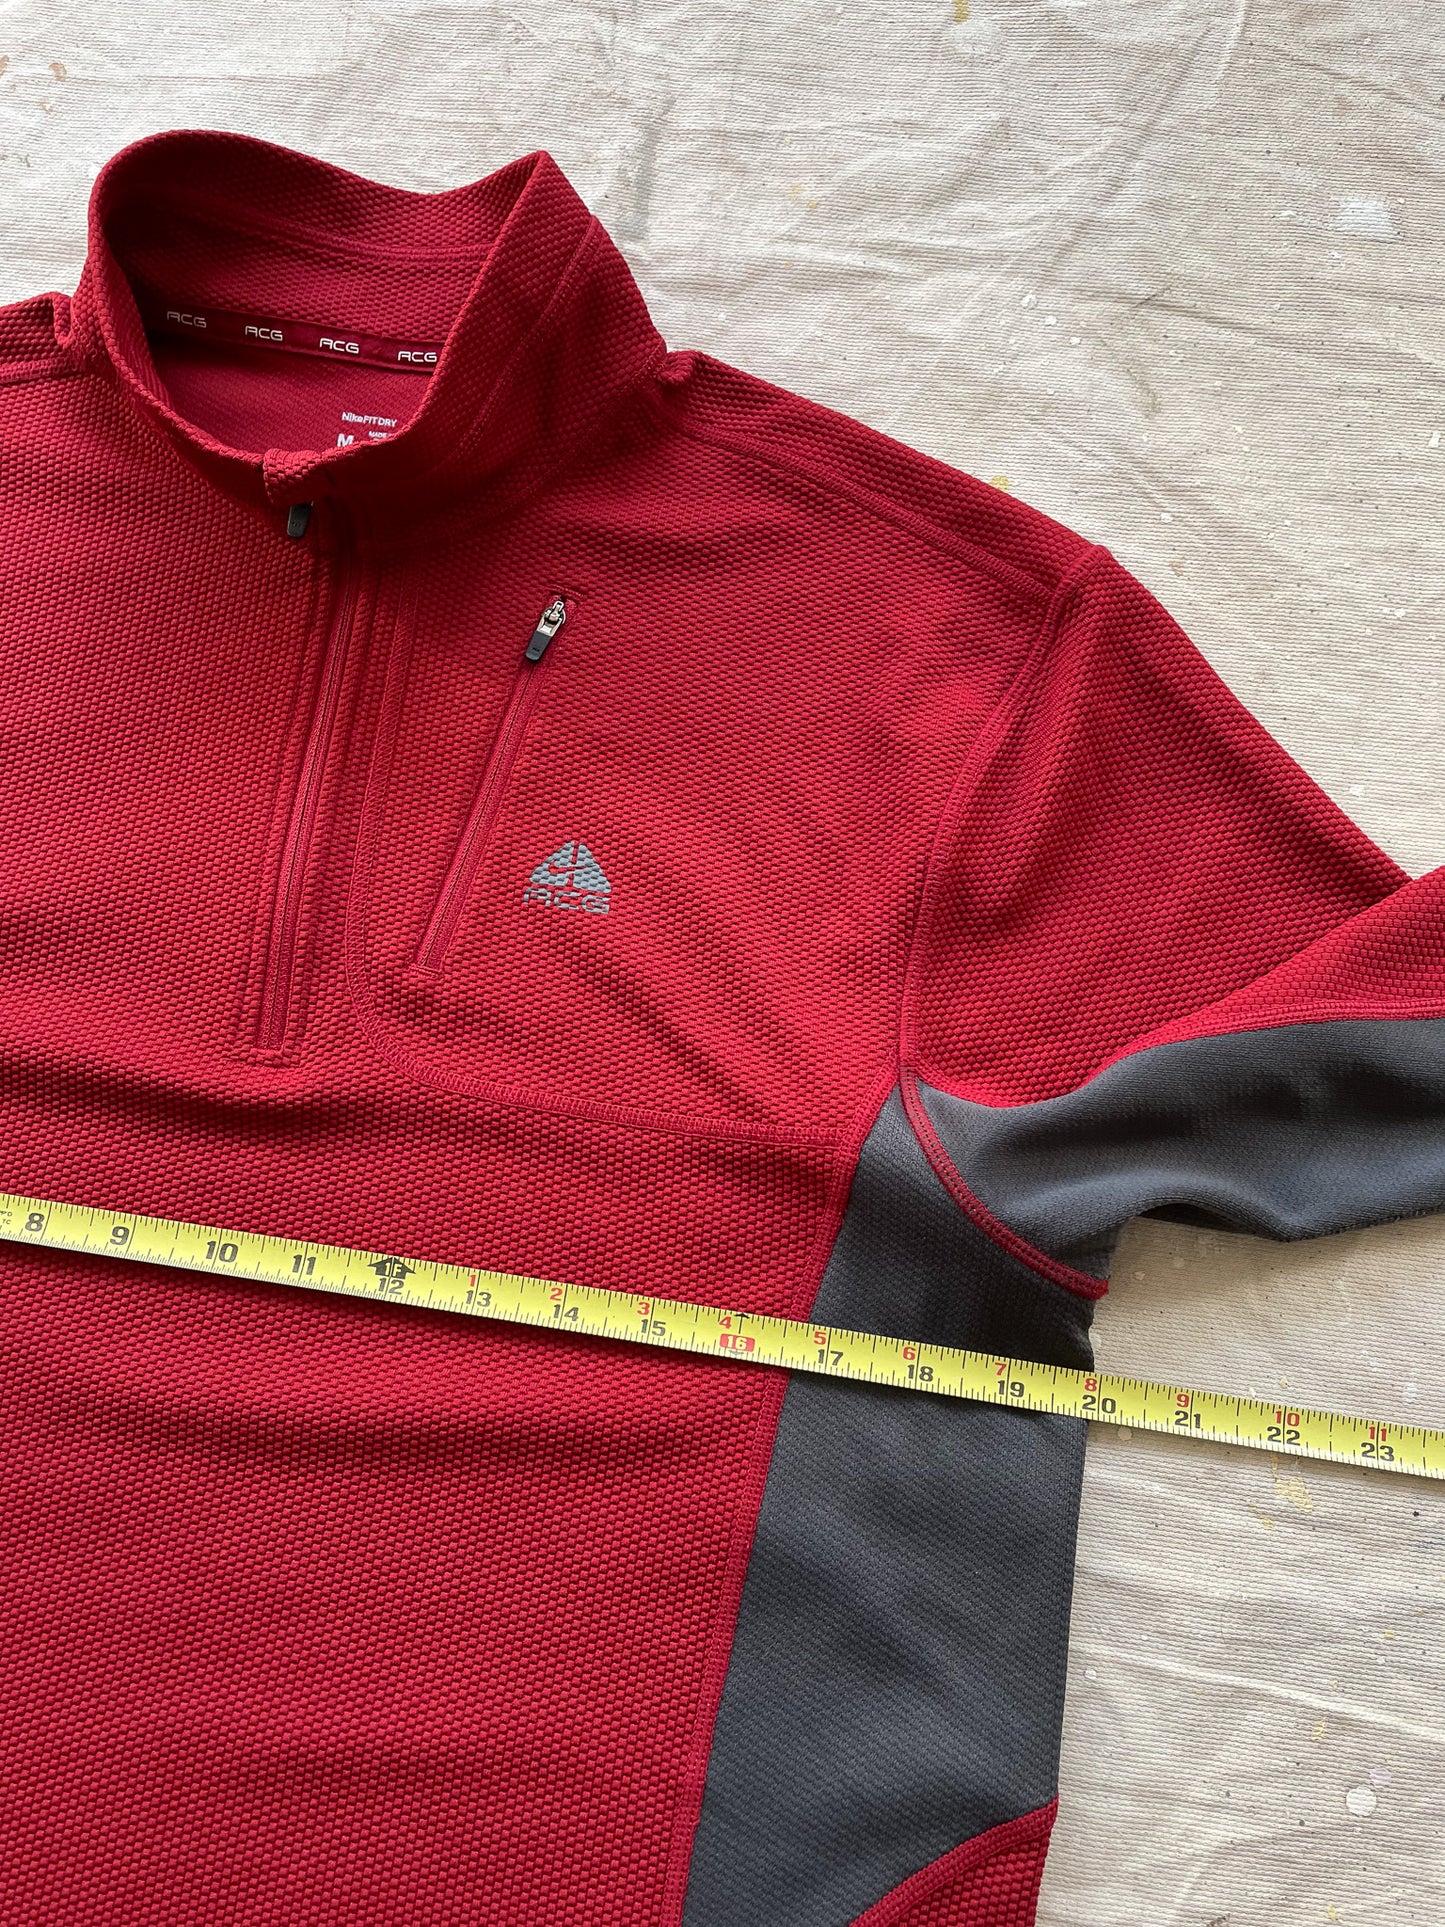 Nike ACG Dry Fit Quarter Zip Shirt—[M]